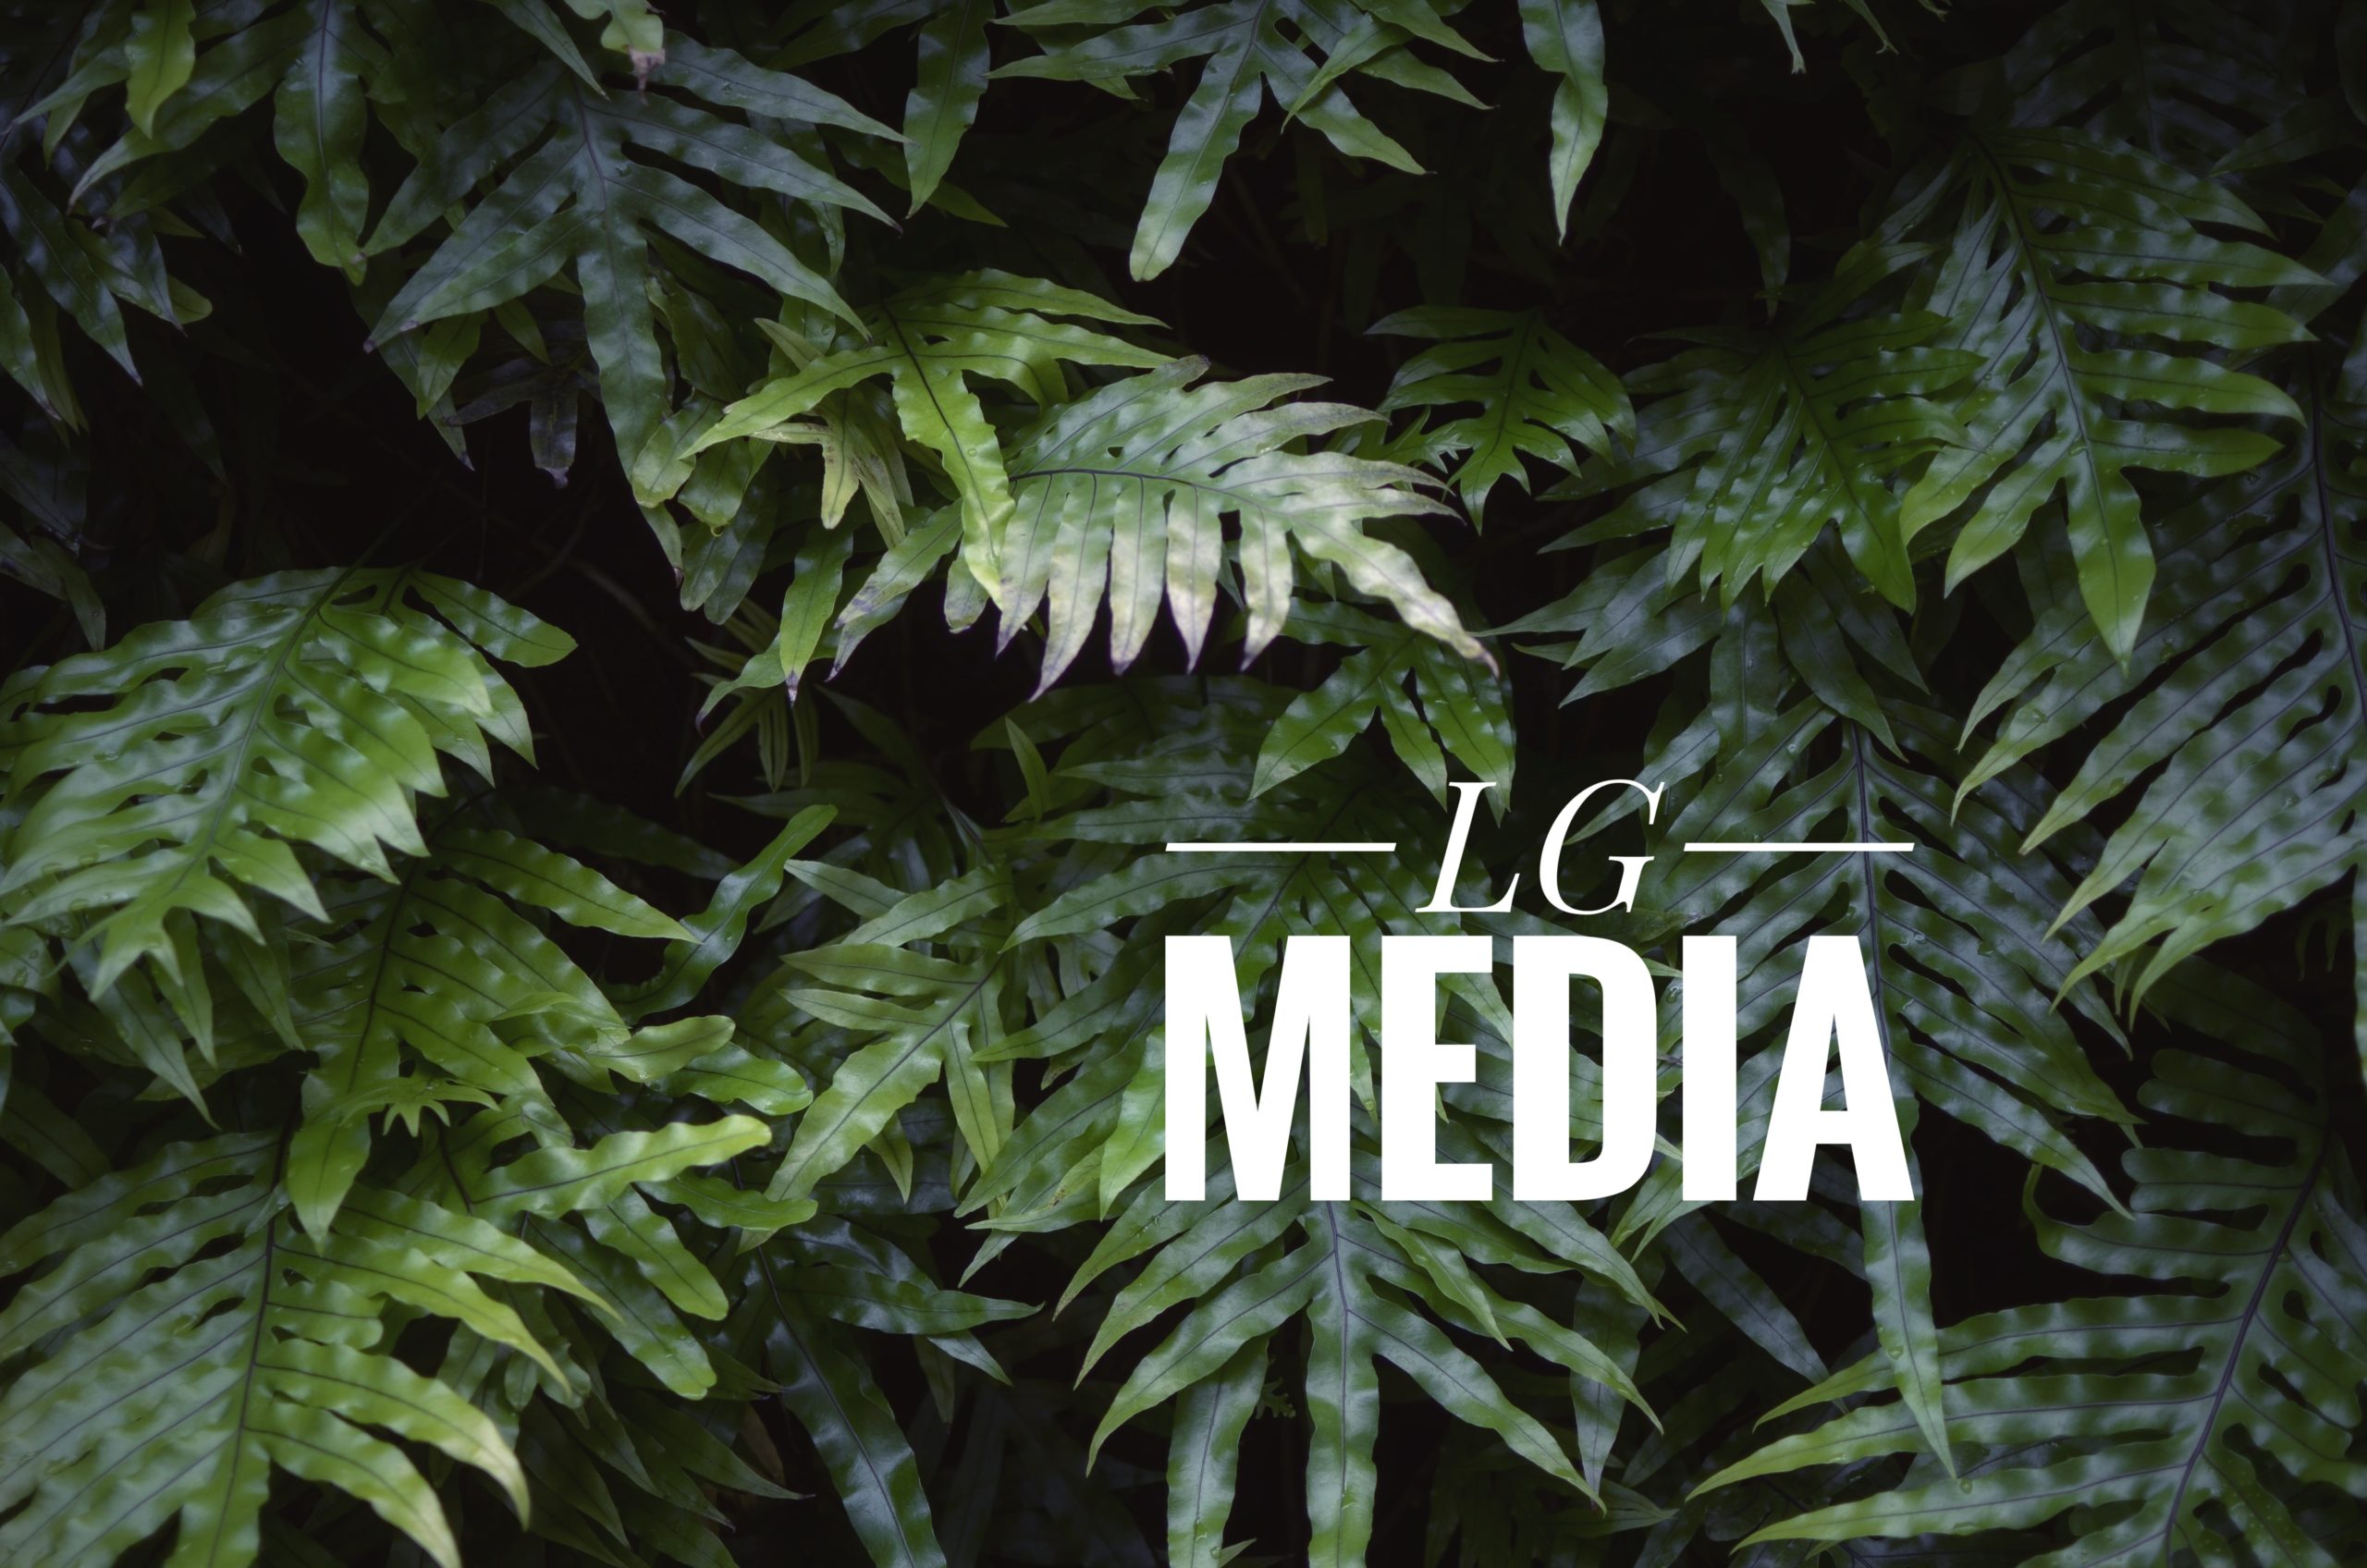 LG Media scaled